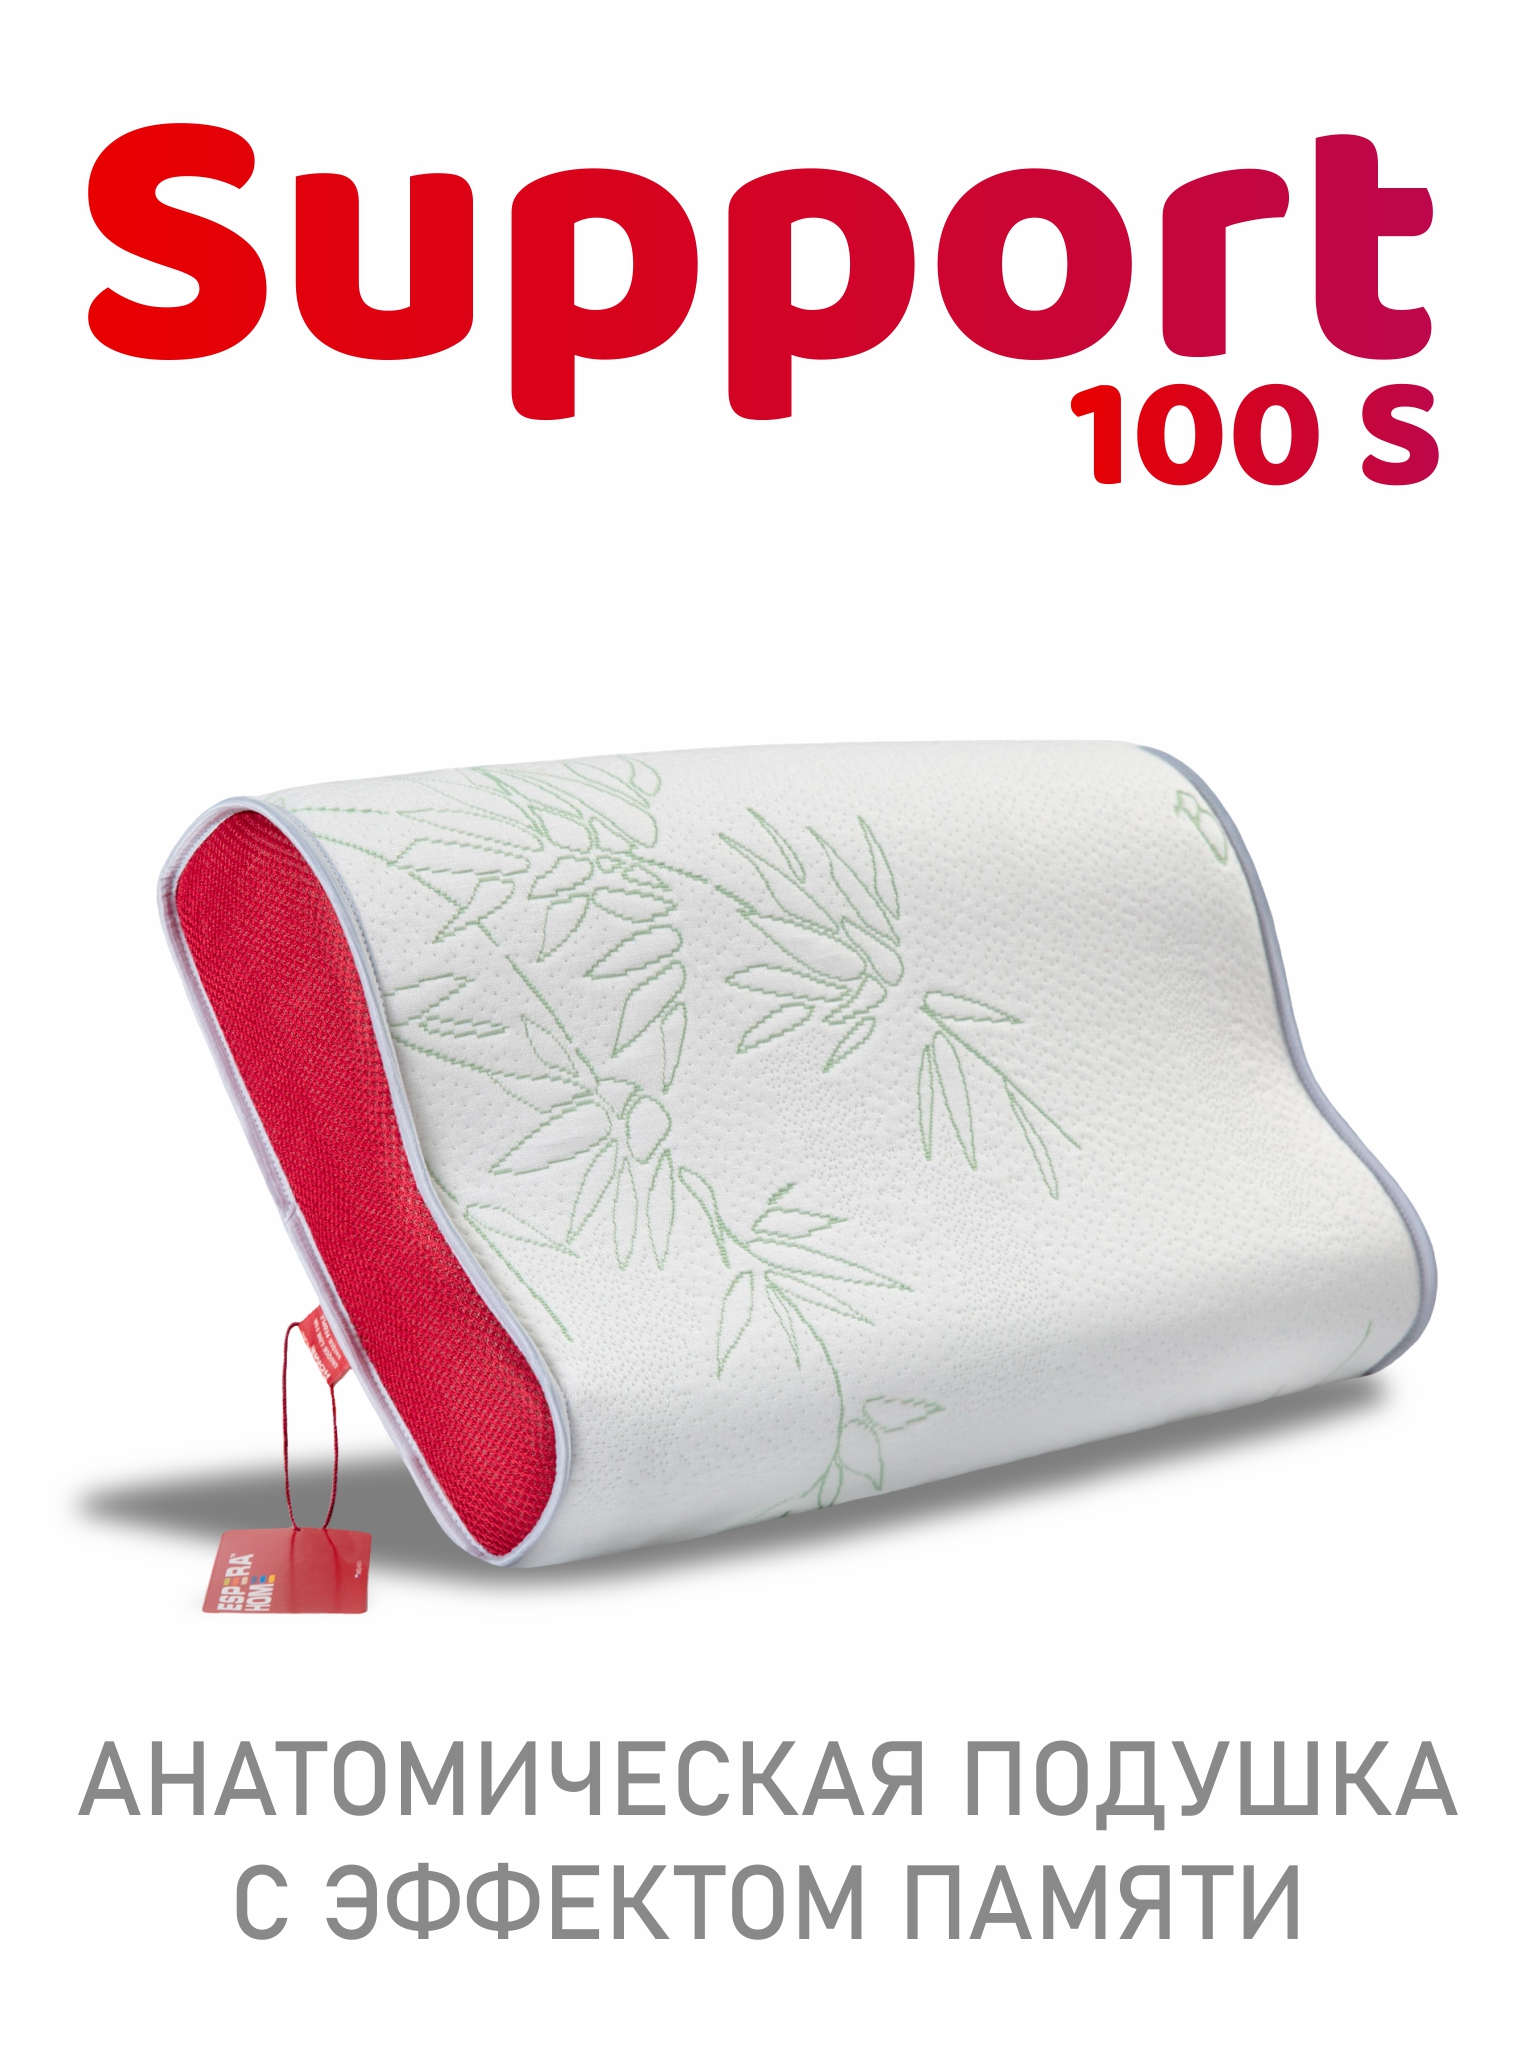 Подушка c эффектом памяти • Espera Support 100S / Эспера Супорт 100С  • Memory Foam 30х50 см